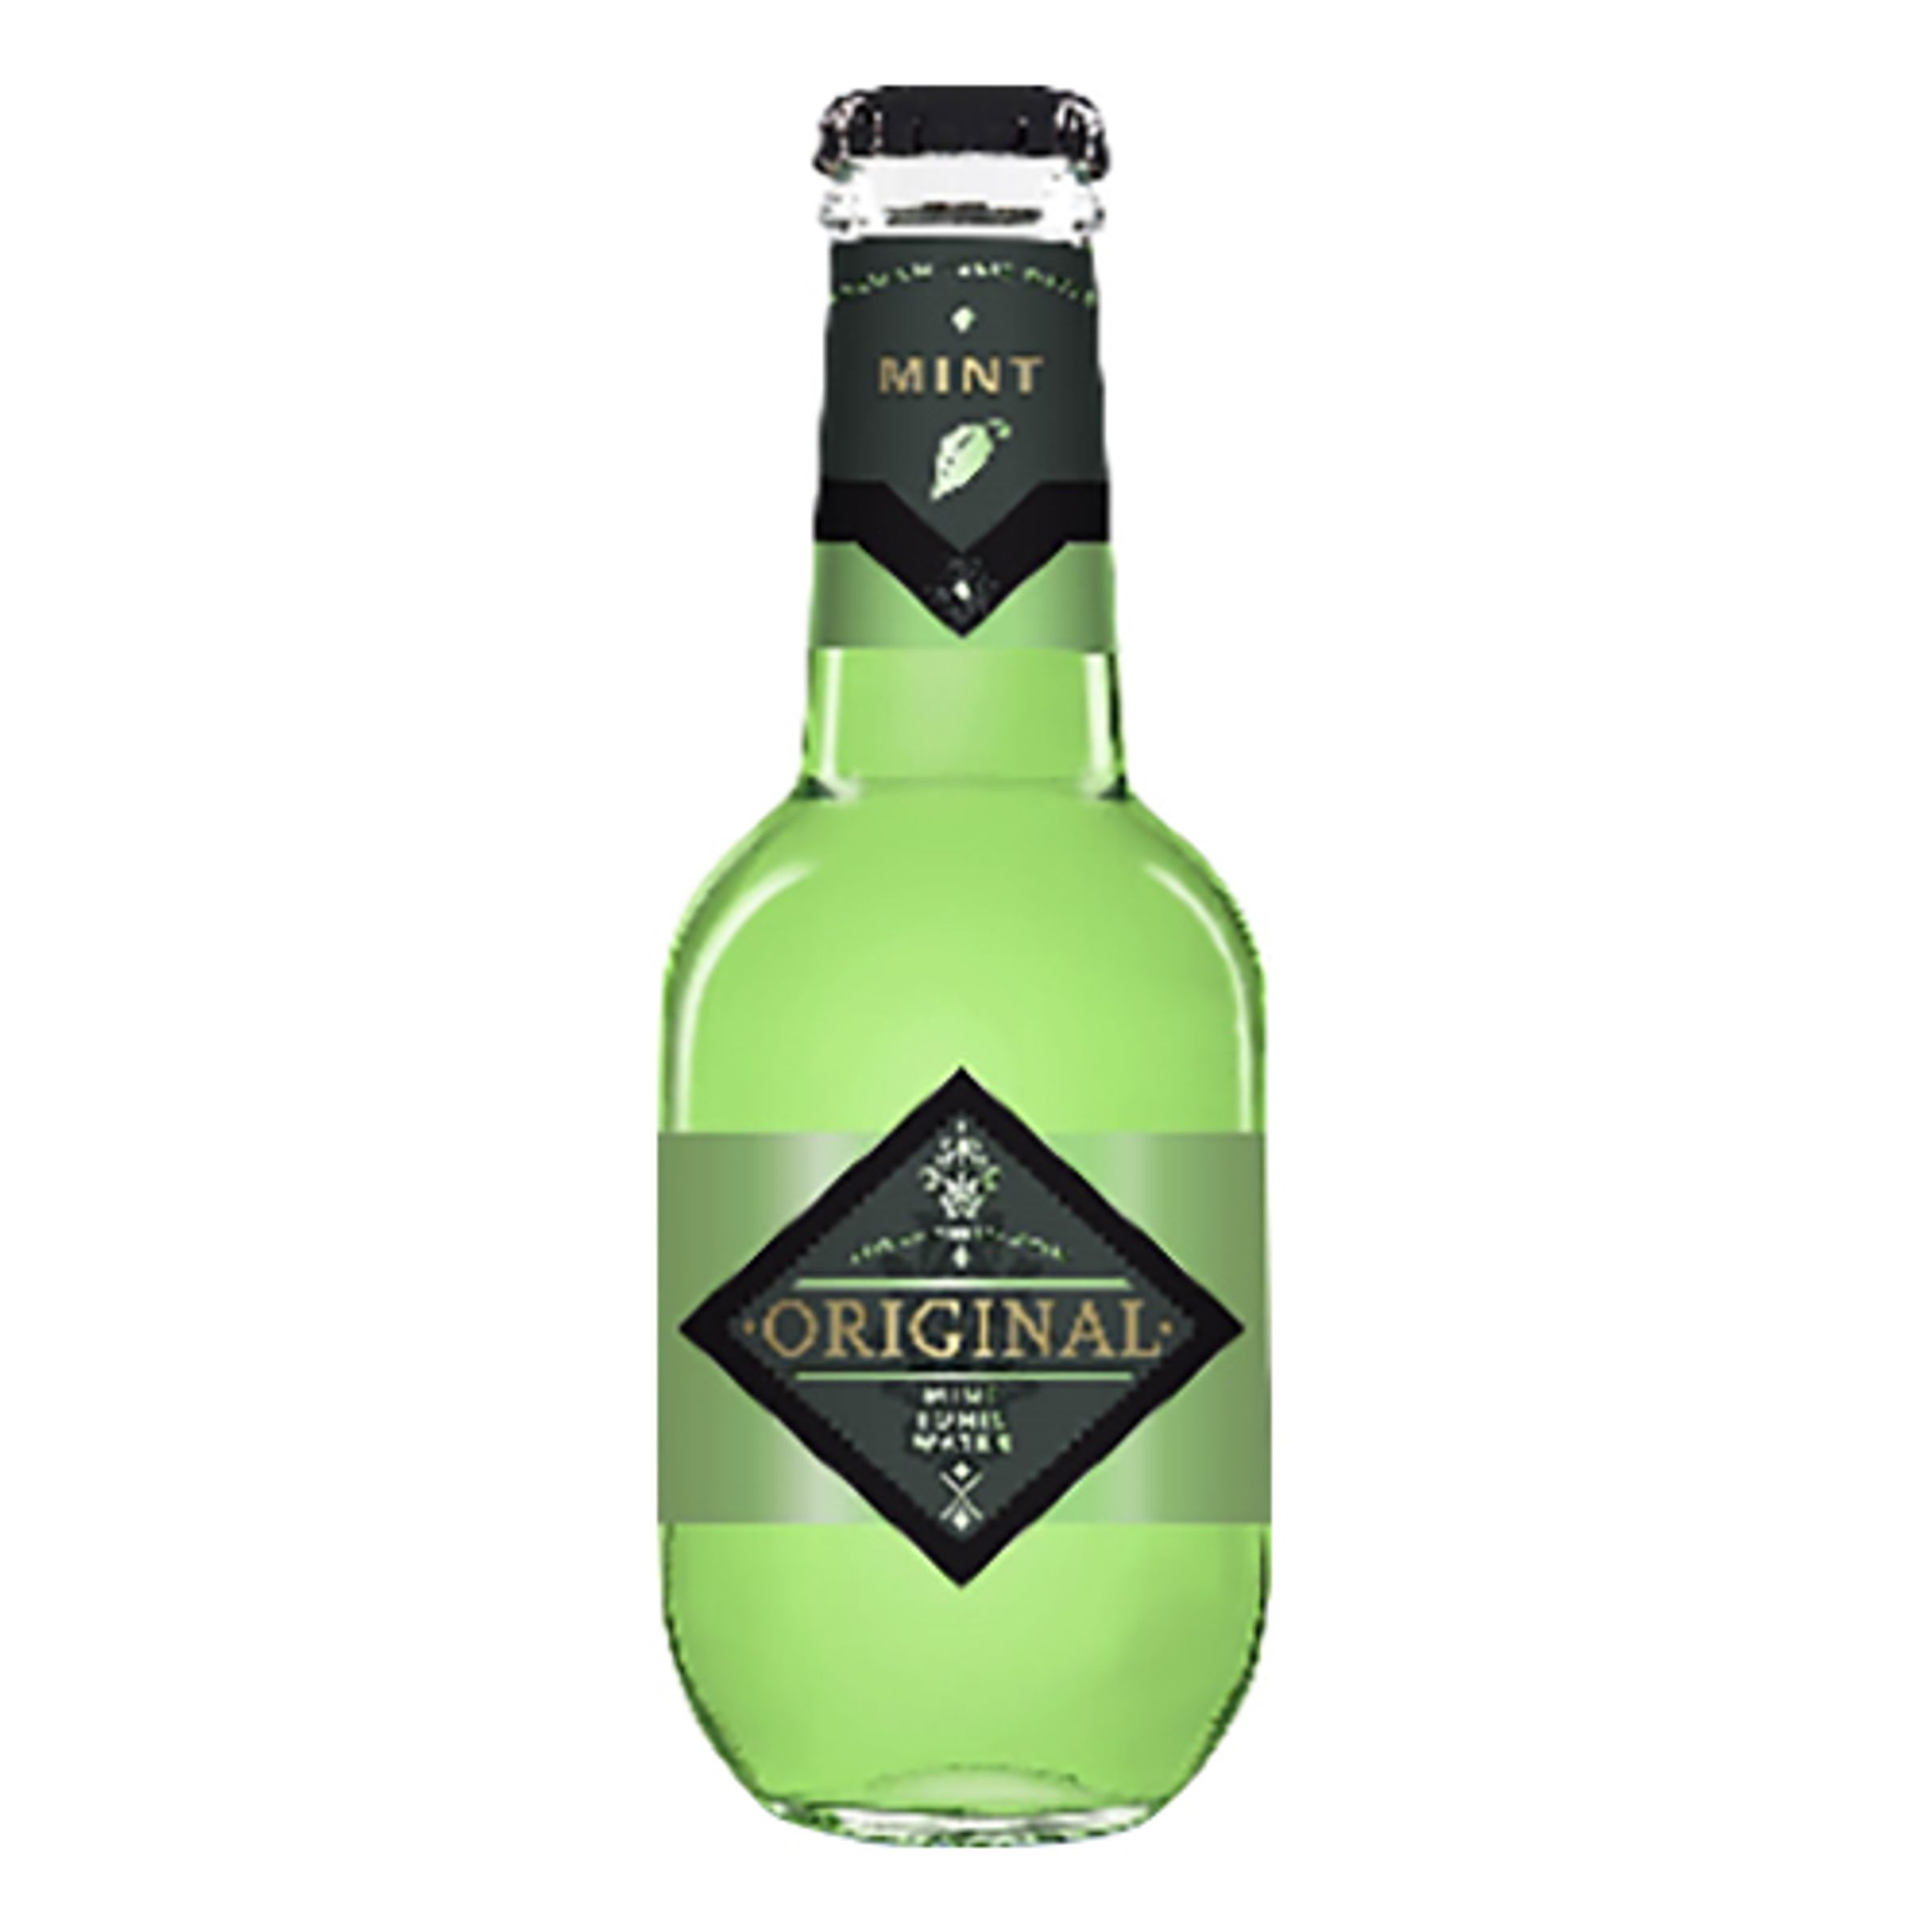 Original Tonic Mint - 200 ml